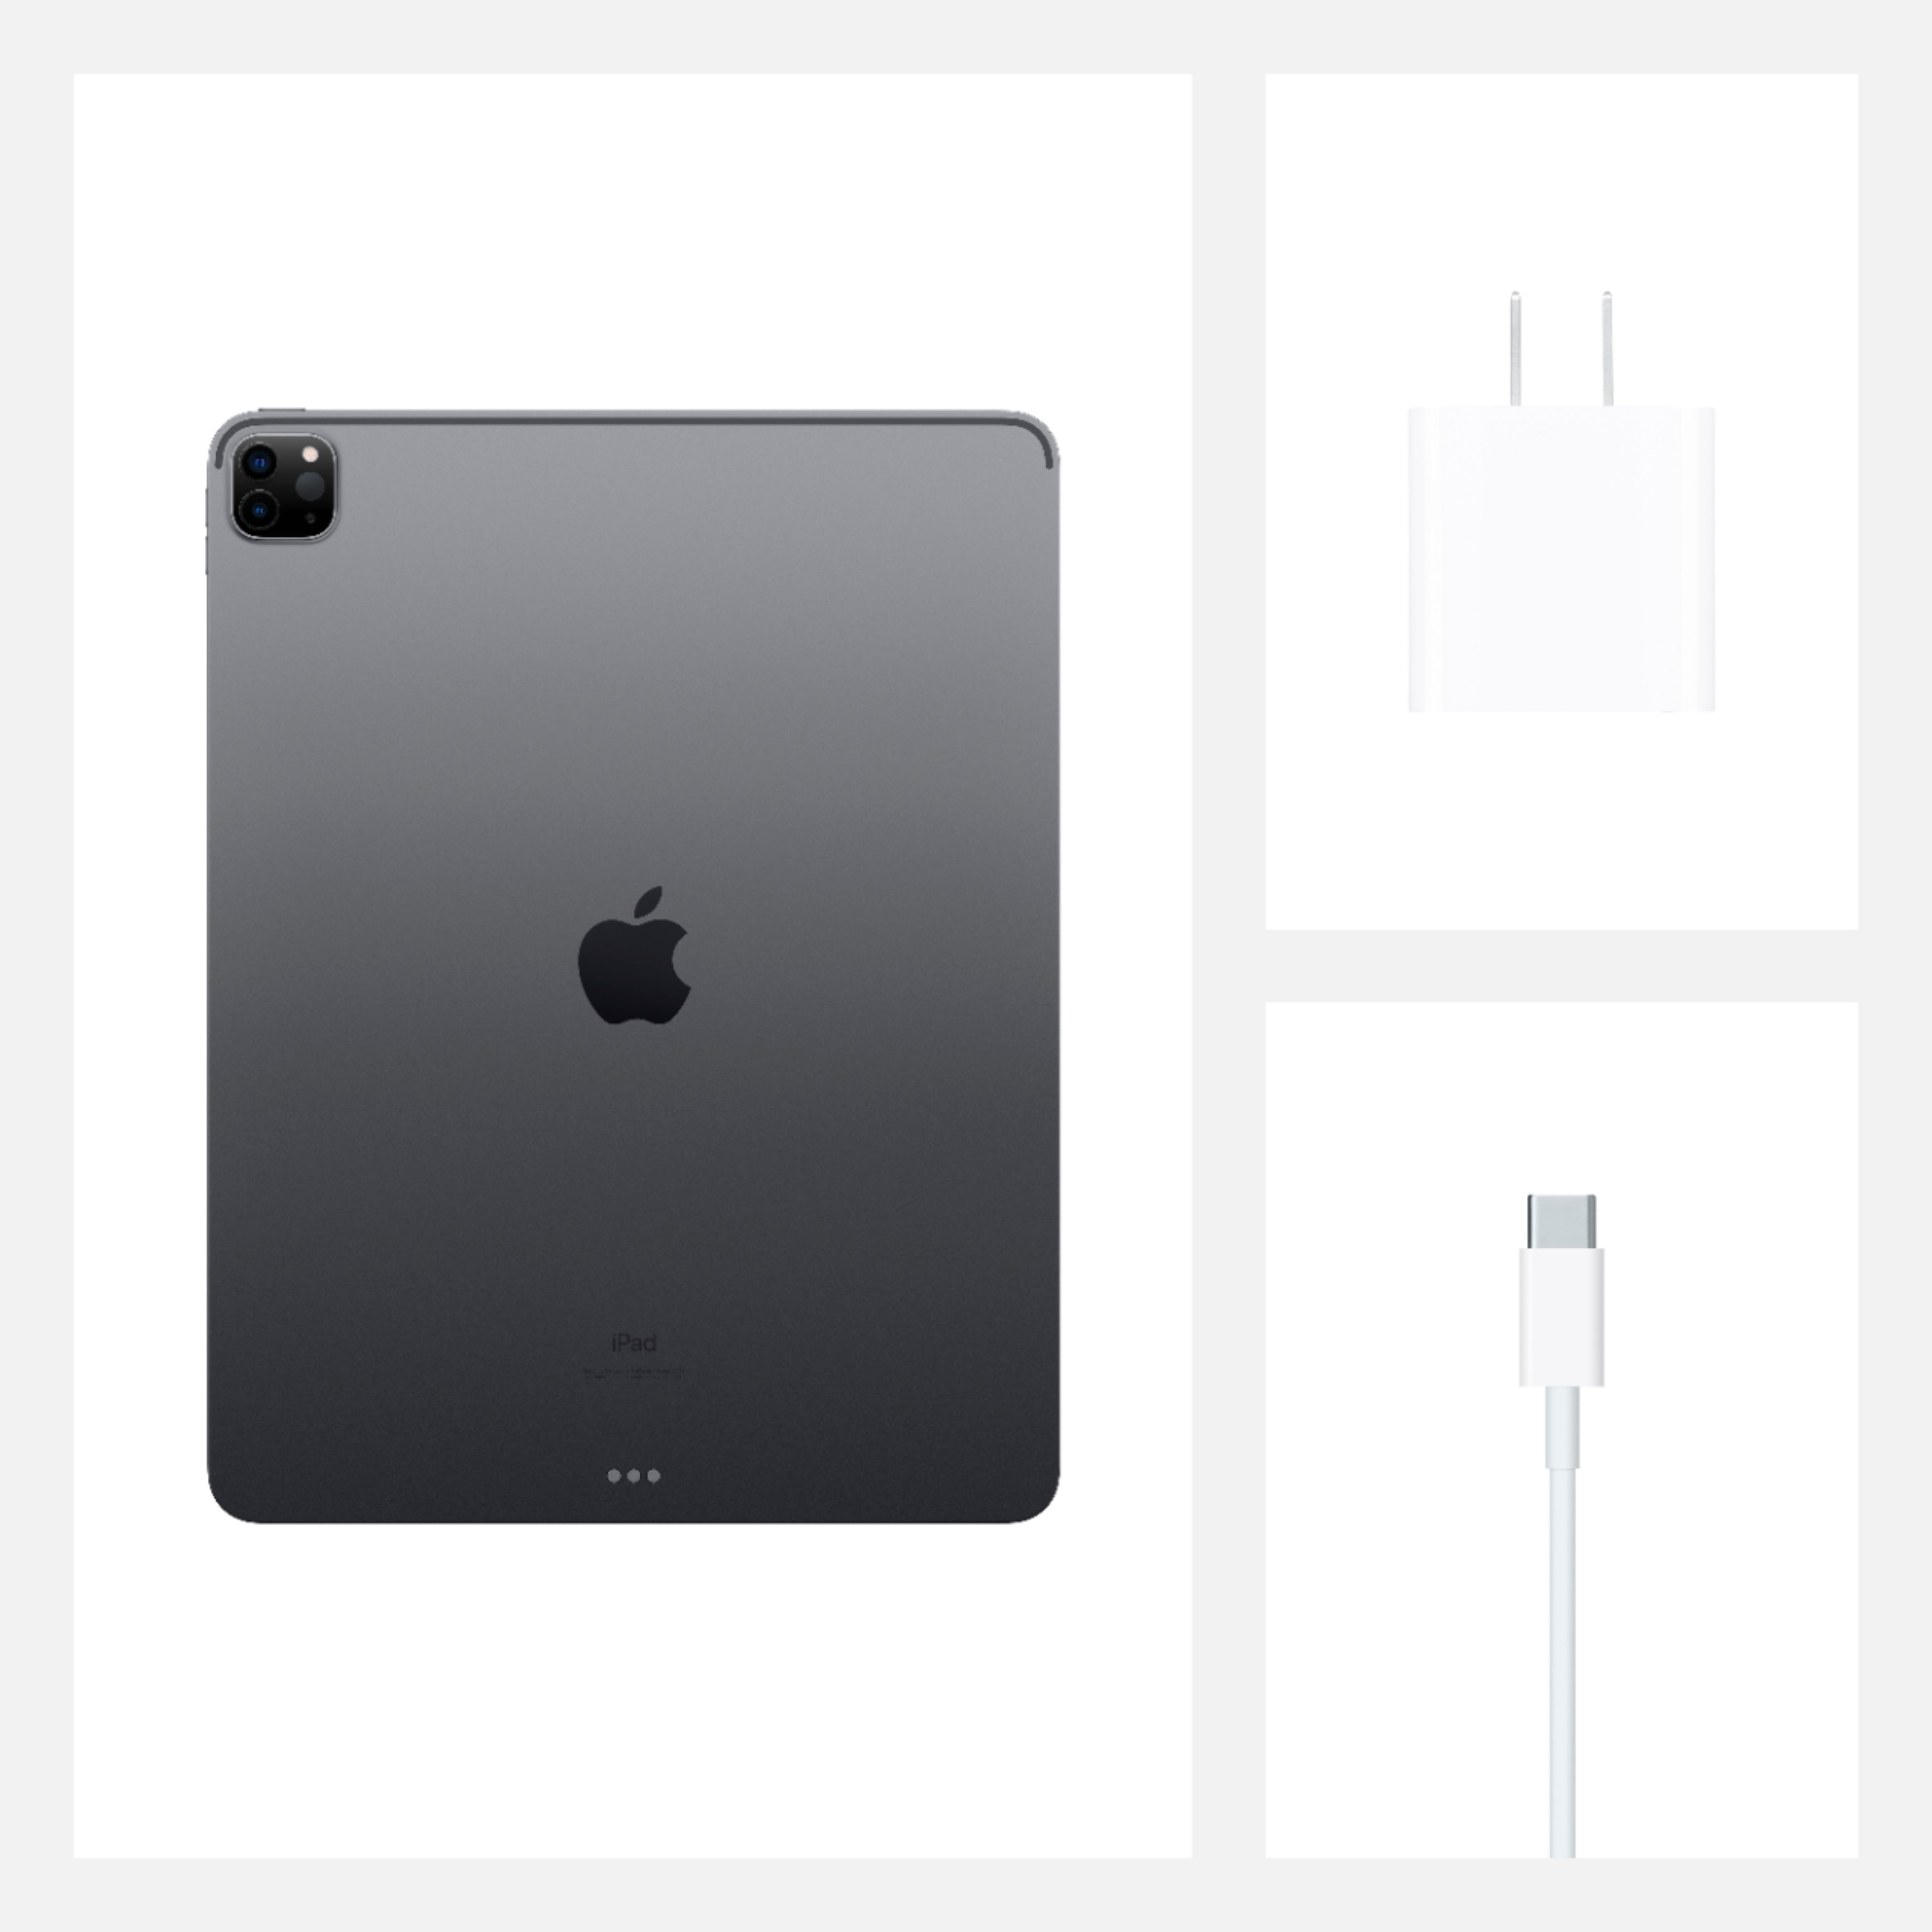 Apple 12.9-Inch iPad Pro (Latest Model) with Wi-Fi 256GB Space Gray  MNXR3LL/A - Best Buy